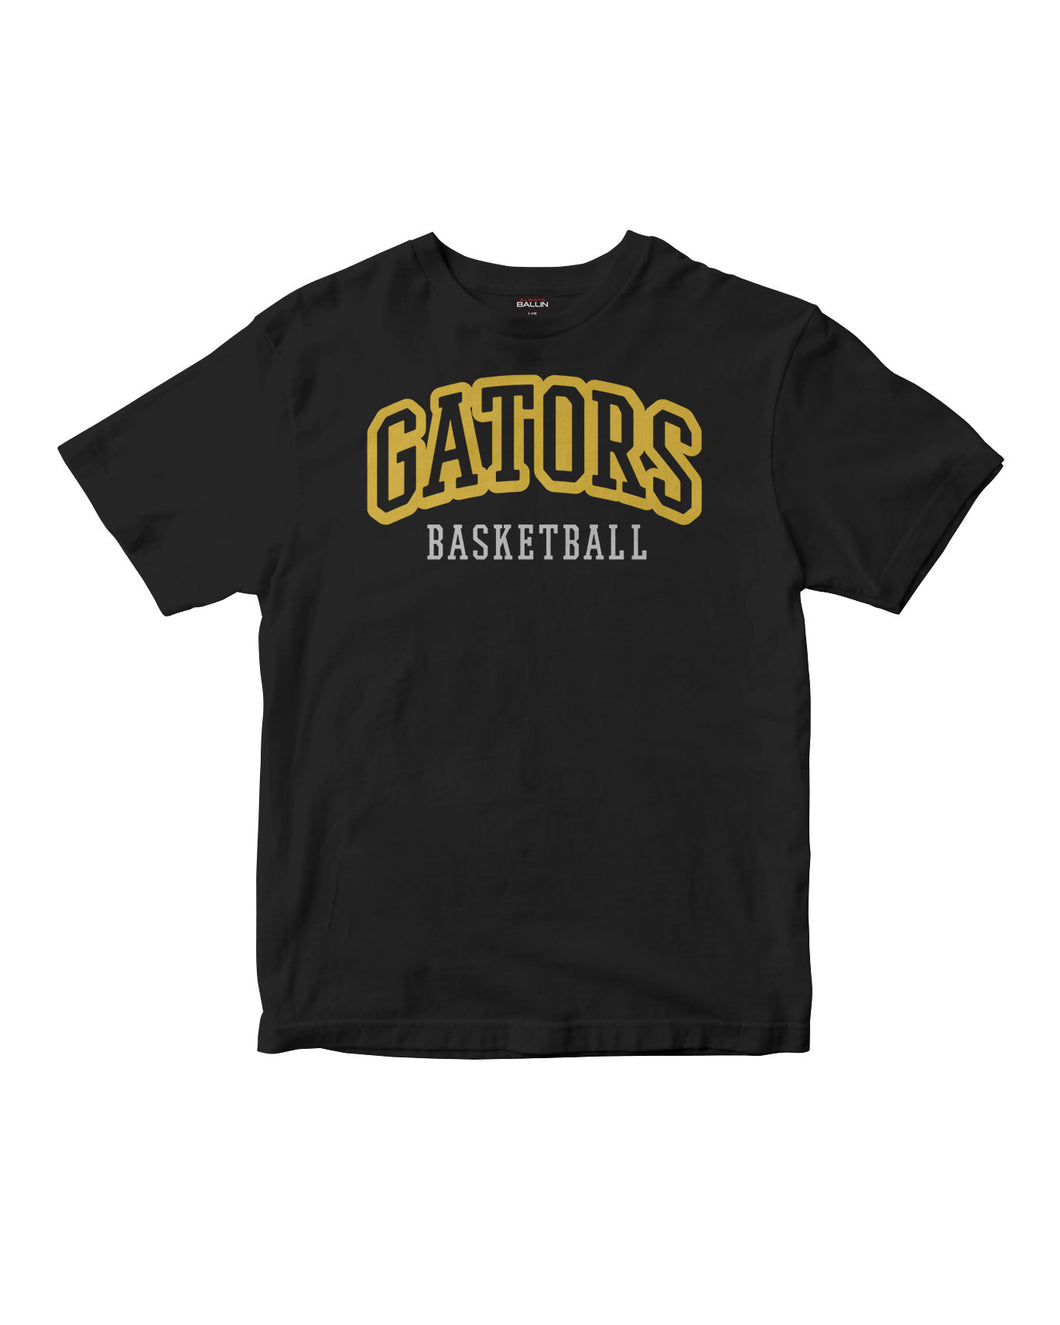 Gators Basketball Kids Black T-Shirt